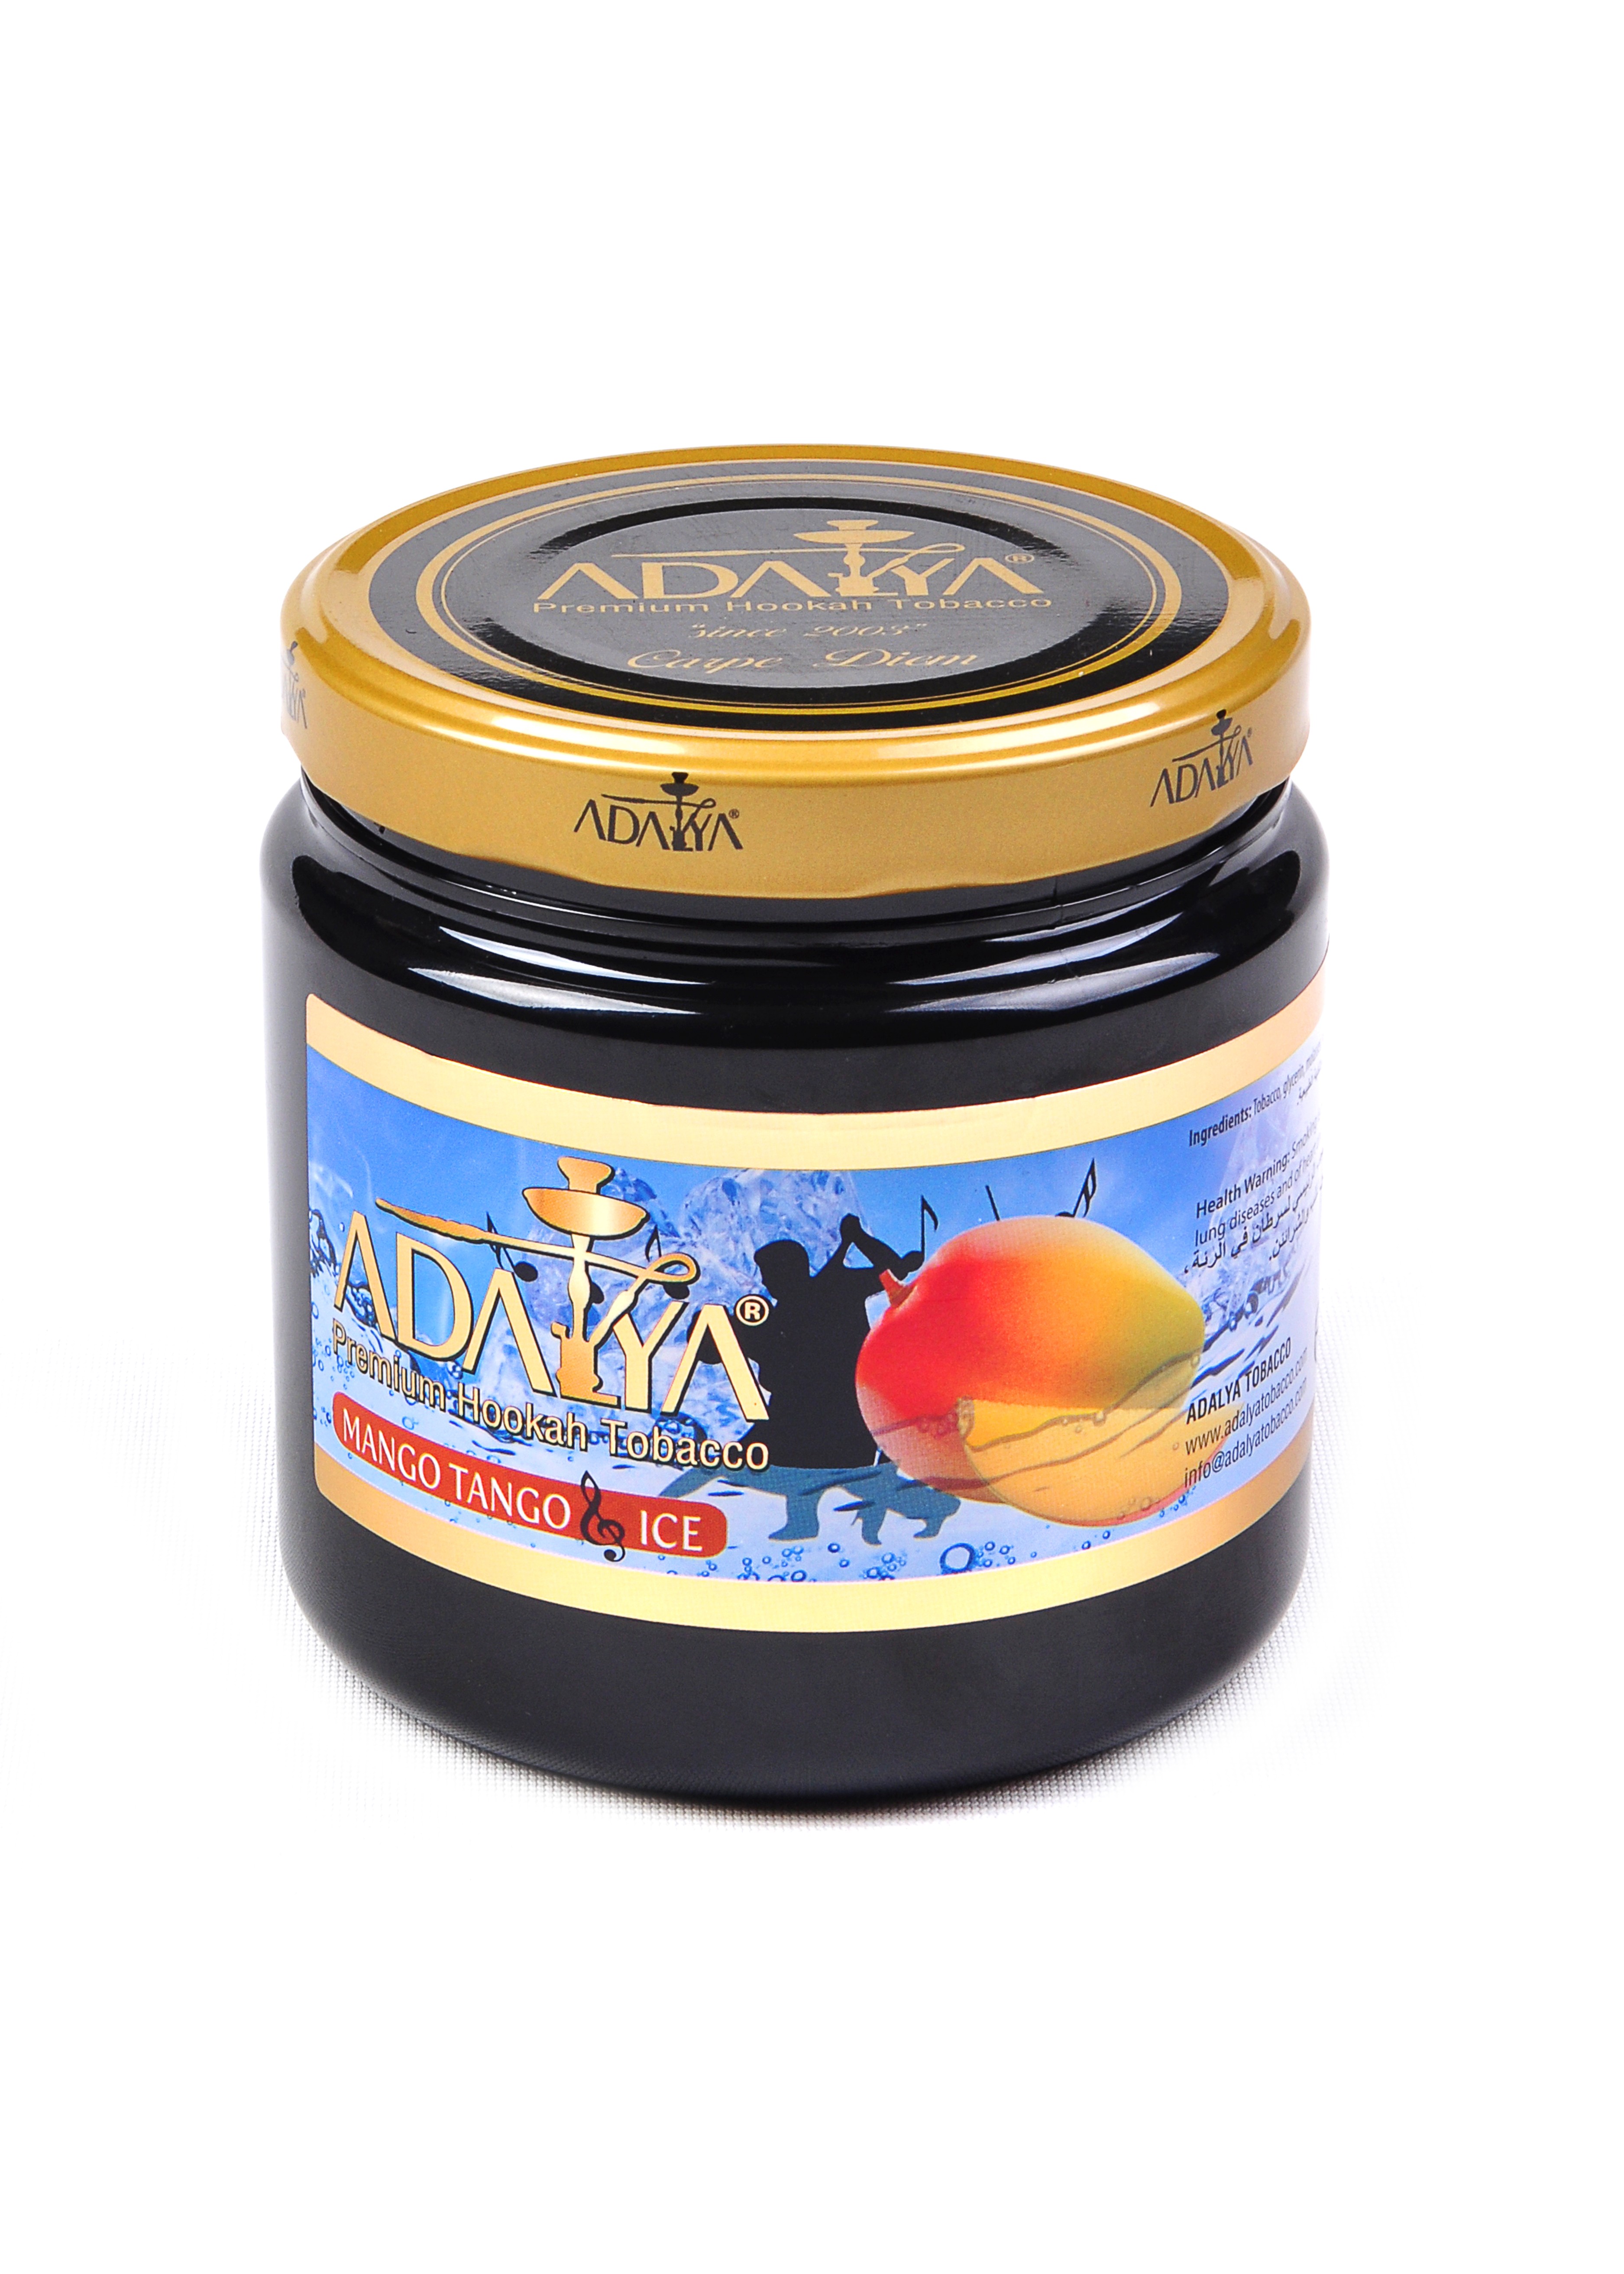 Adalya Mango Tango Ice Shisha Flavour 1kg